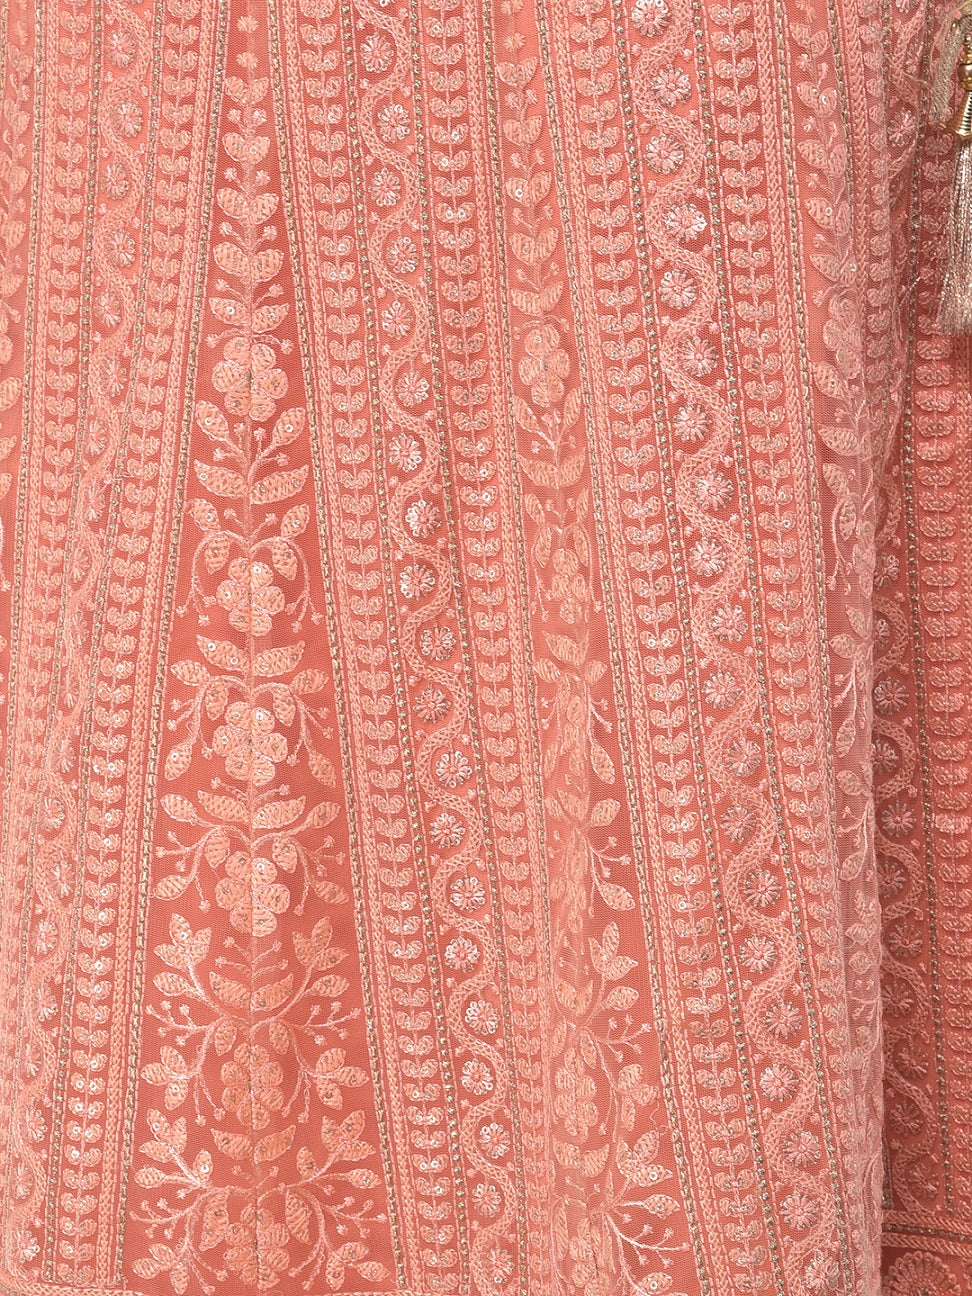 Neeru's Peach Color Nett Fabric Ghagra Set